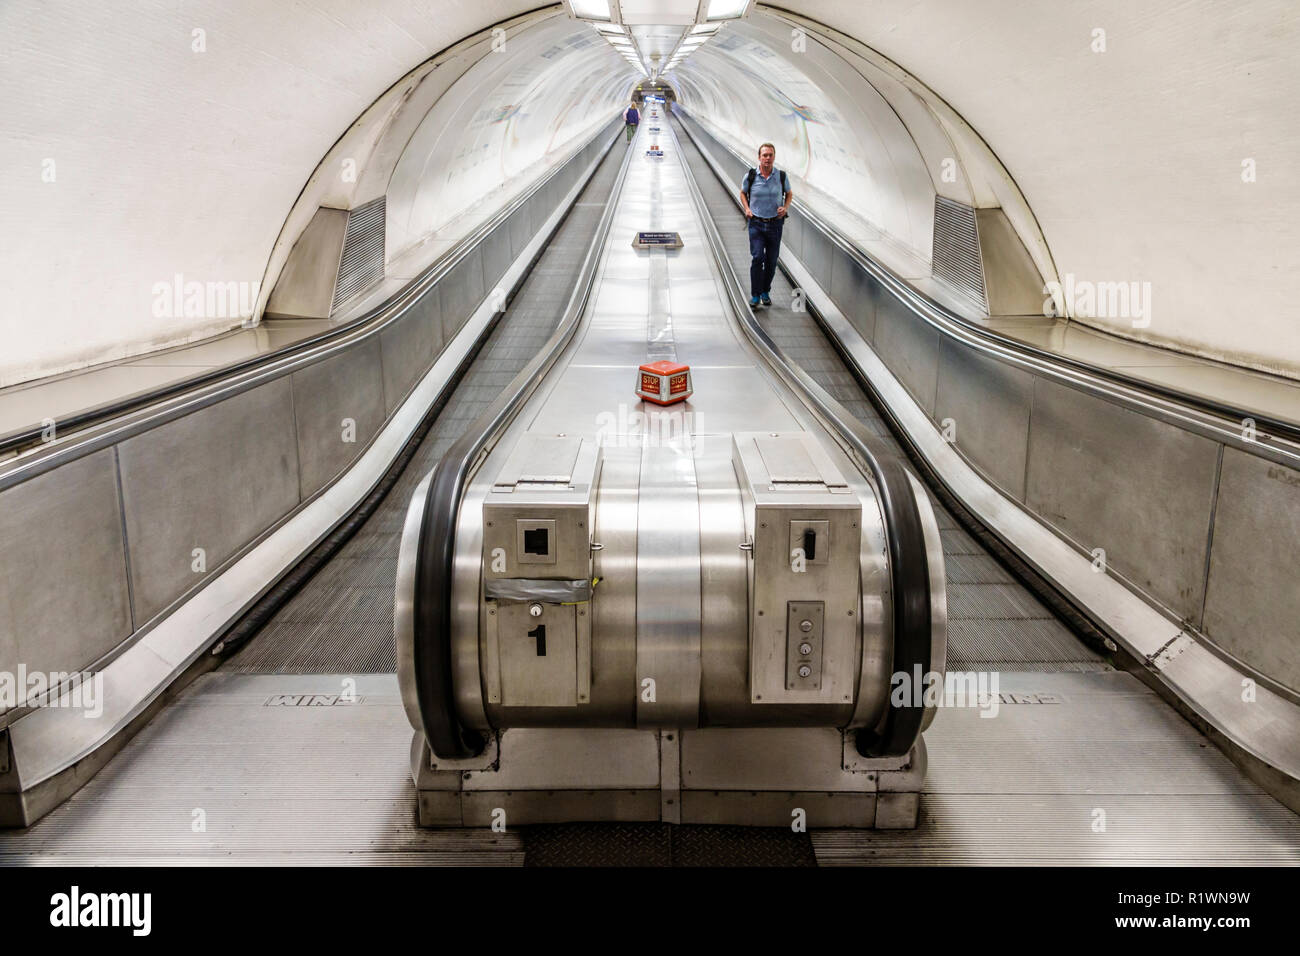 City of London England,UK Bank Underground Station treno Tube,Waterloo & City Line,metro metro travelator,inclined moving walkway,ascending,man men ma Foto Stock